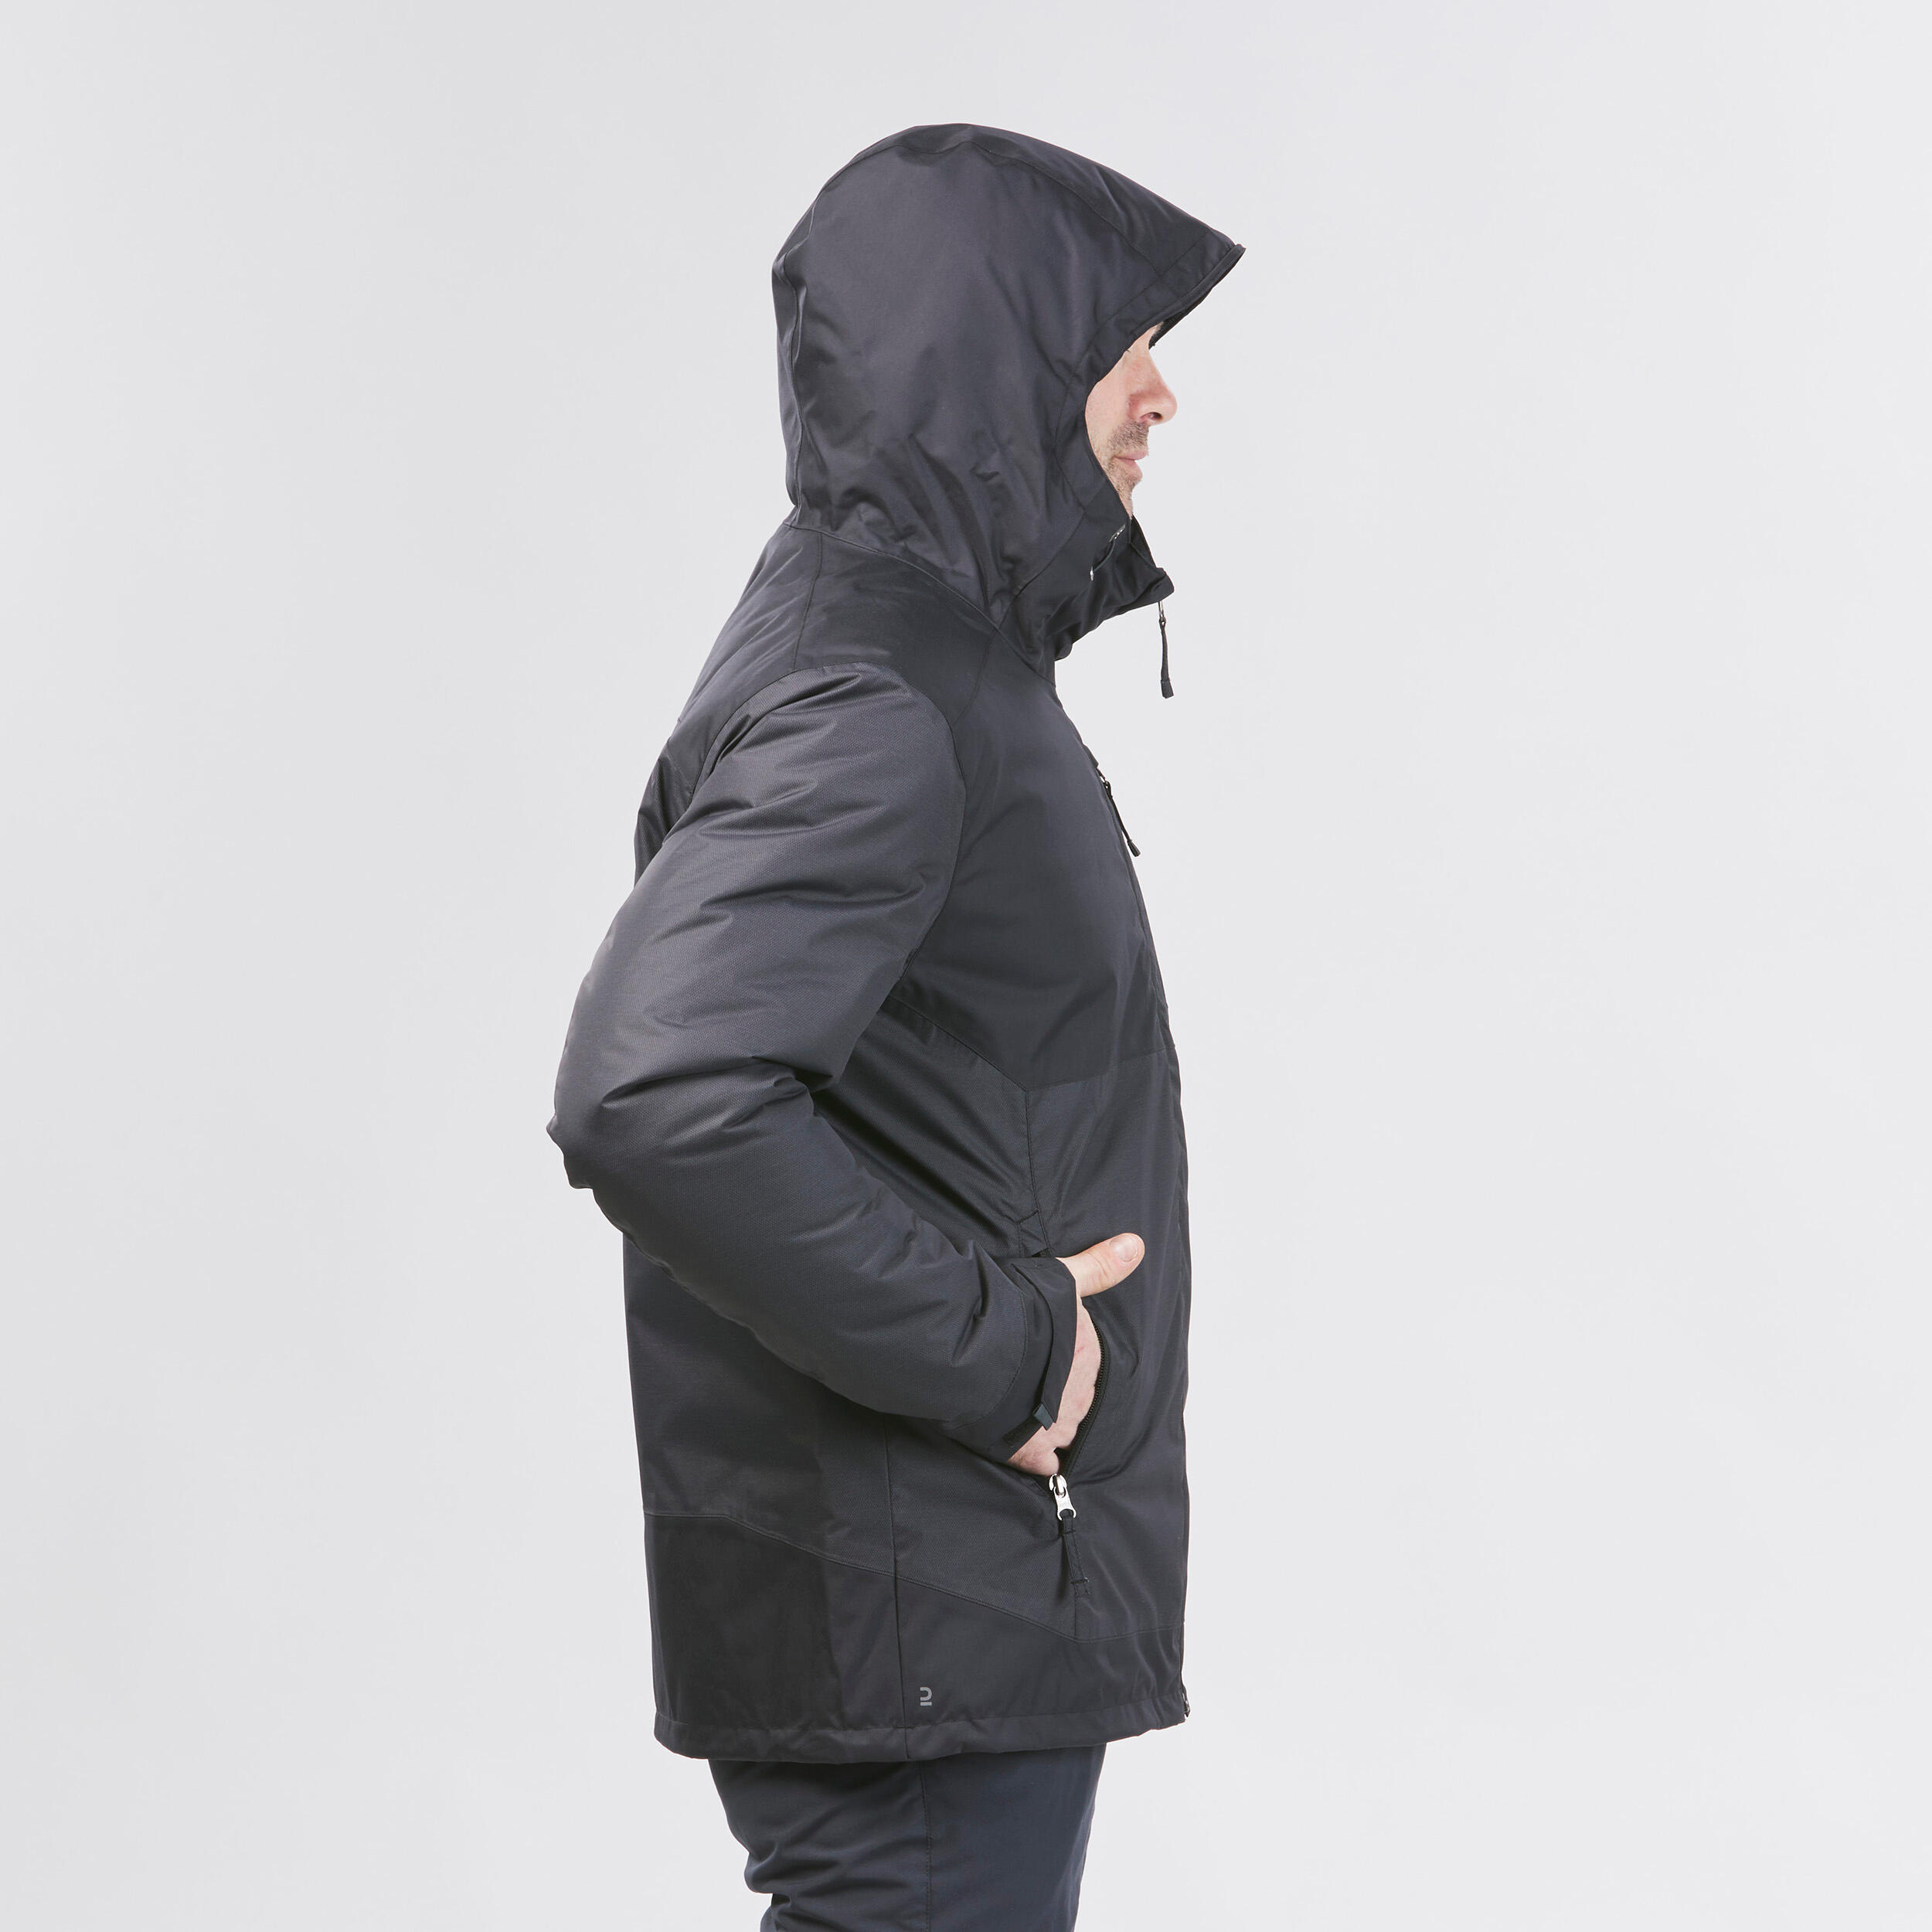 Men's Winter Jacket - SH 500 Black - smoked black, black - Quechua -  Decathlon